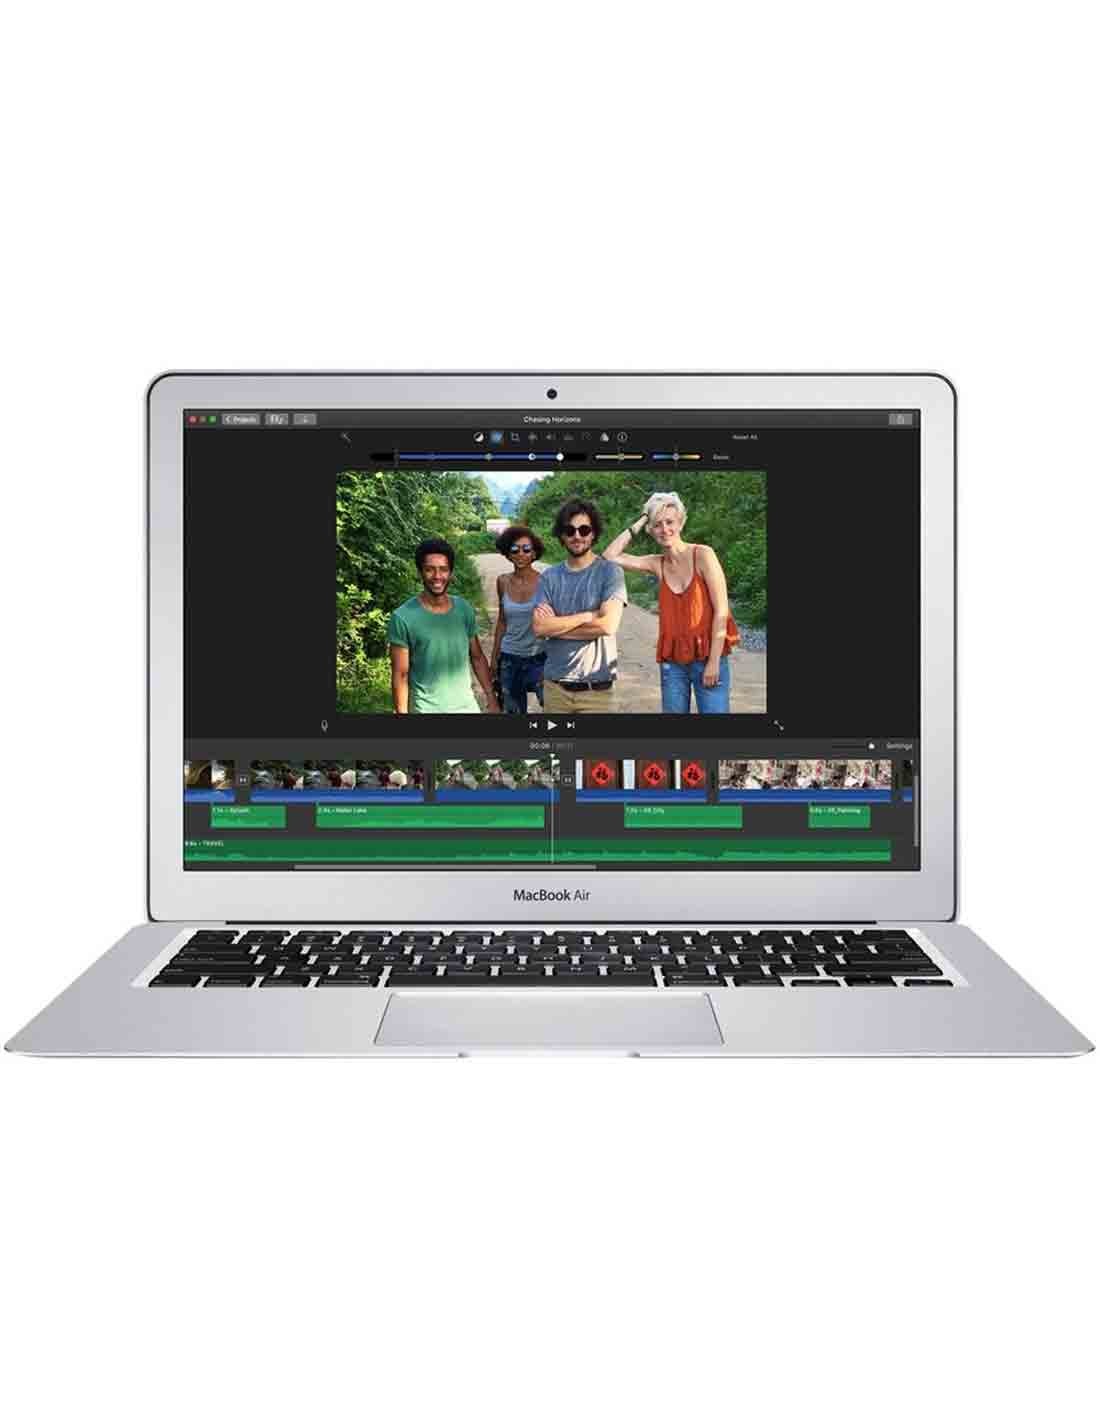 Apple MacBook Air 512GB Silver Buy Online at an Affordable Price in Dubai UAE